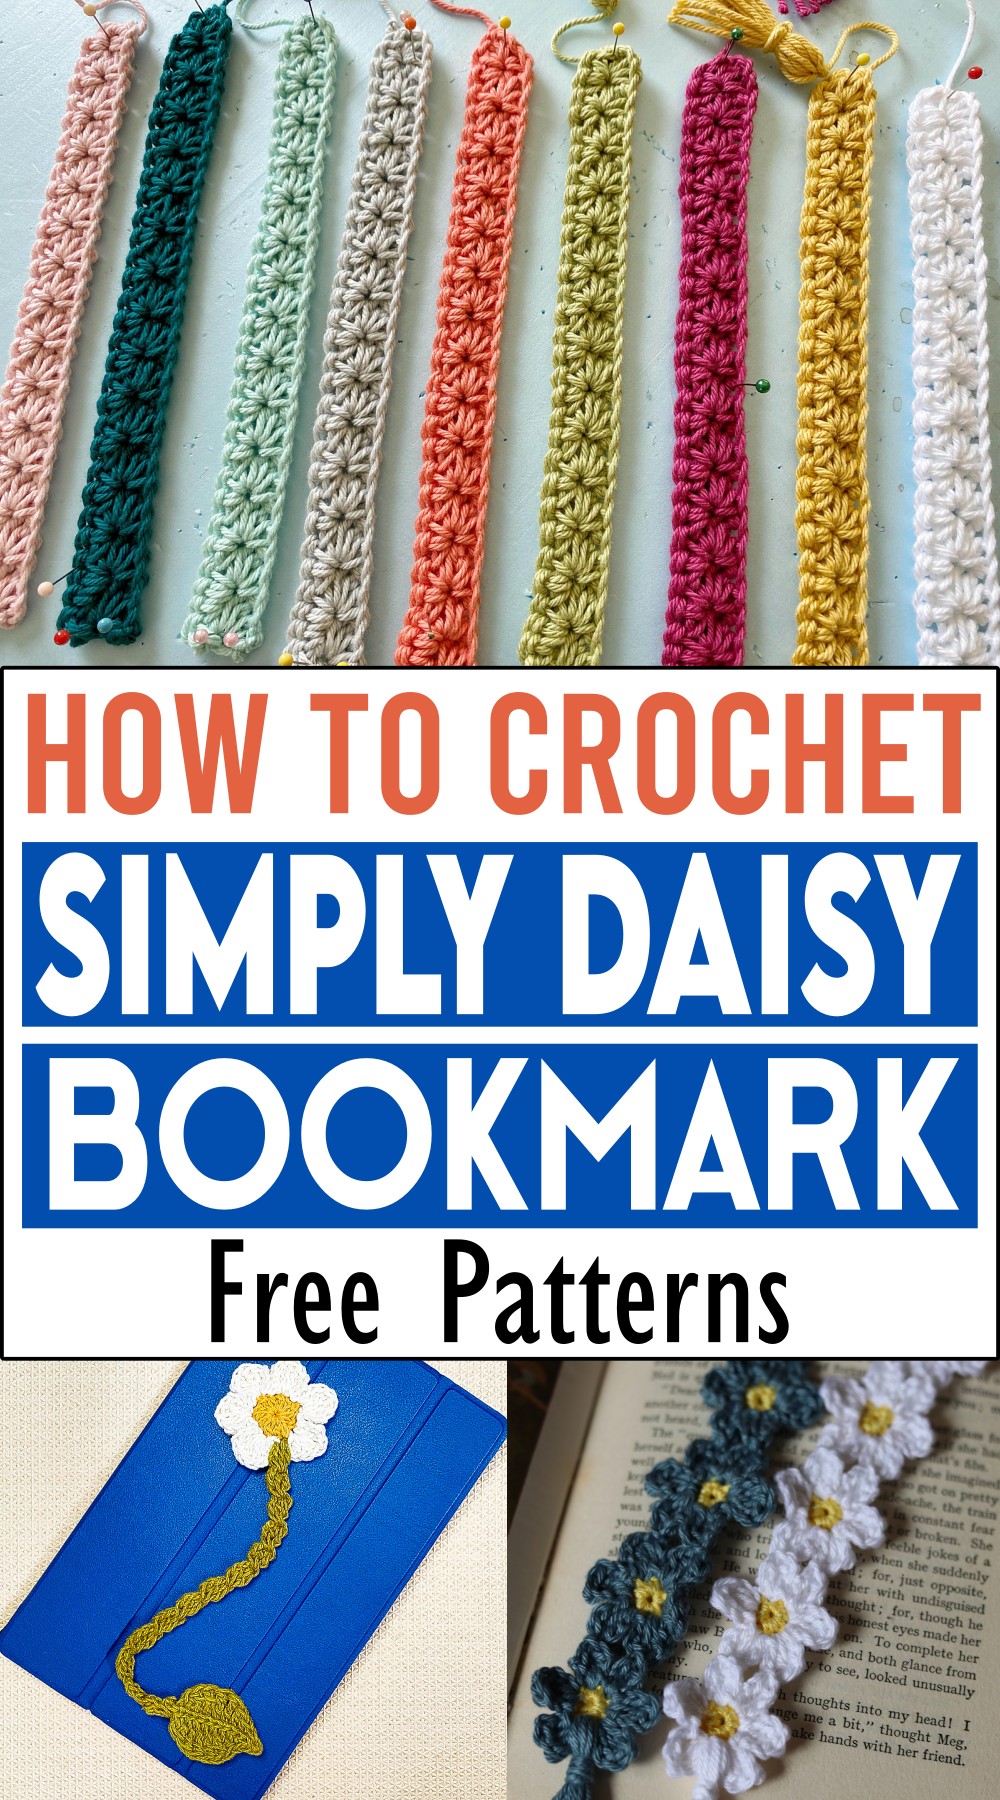 How to Crochet Simply Daisy Bookmark